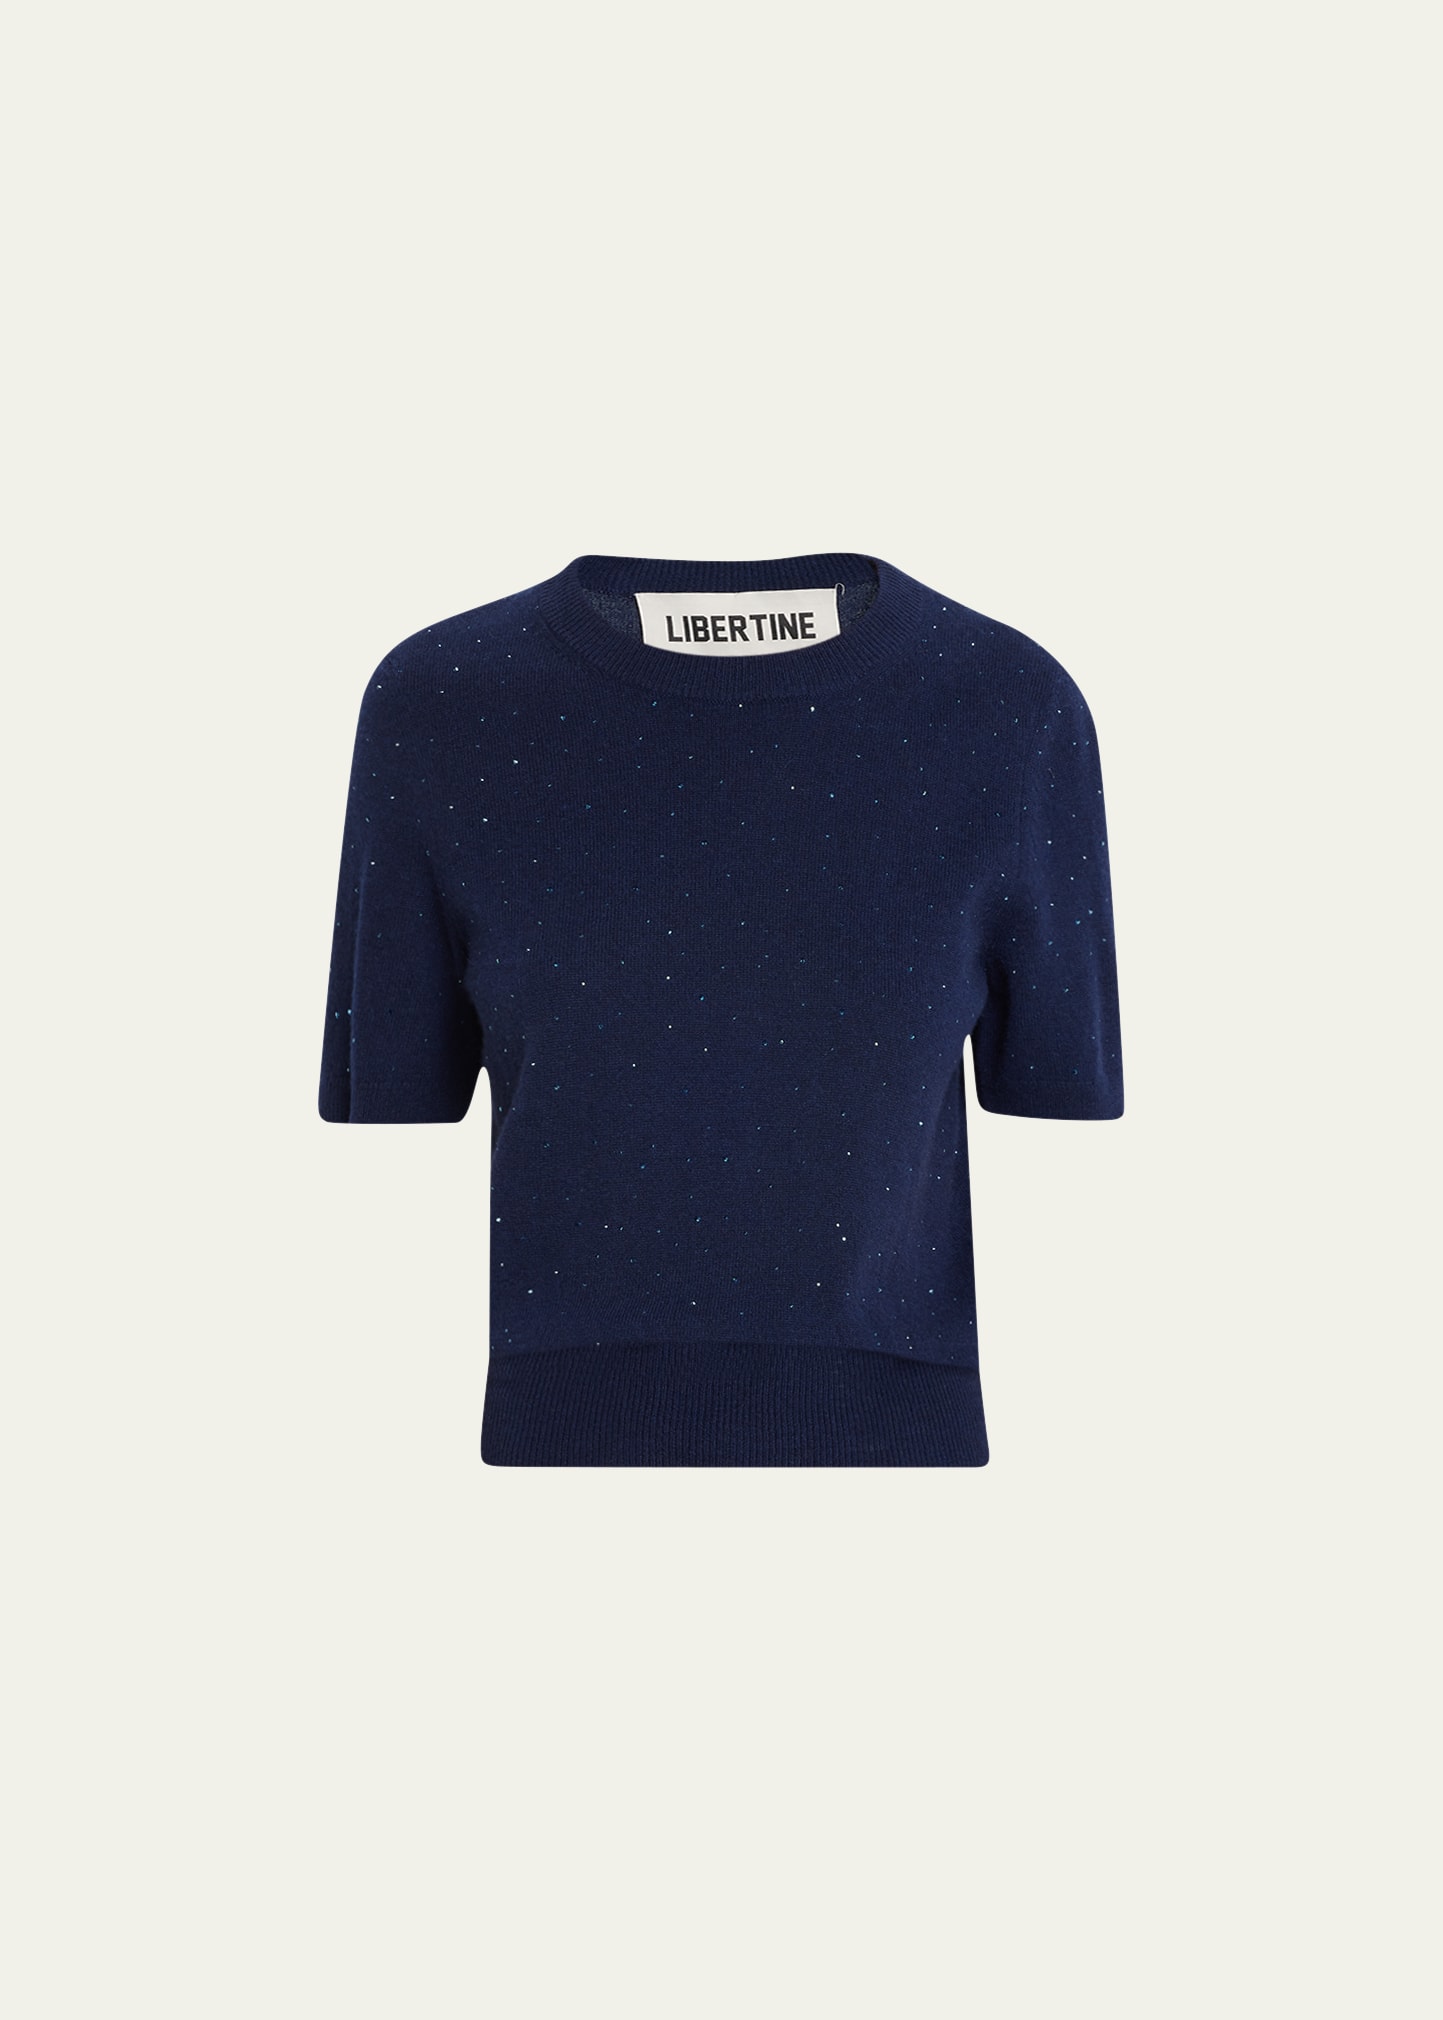 Libertine Stardust Cashmere Sweater With Rhinestone Embellishment In Navy